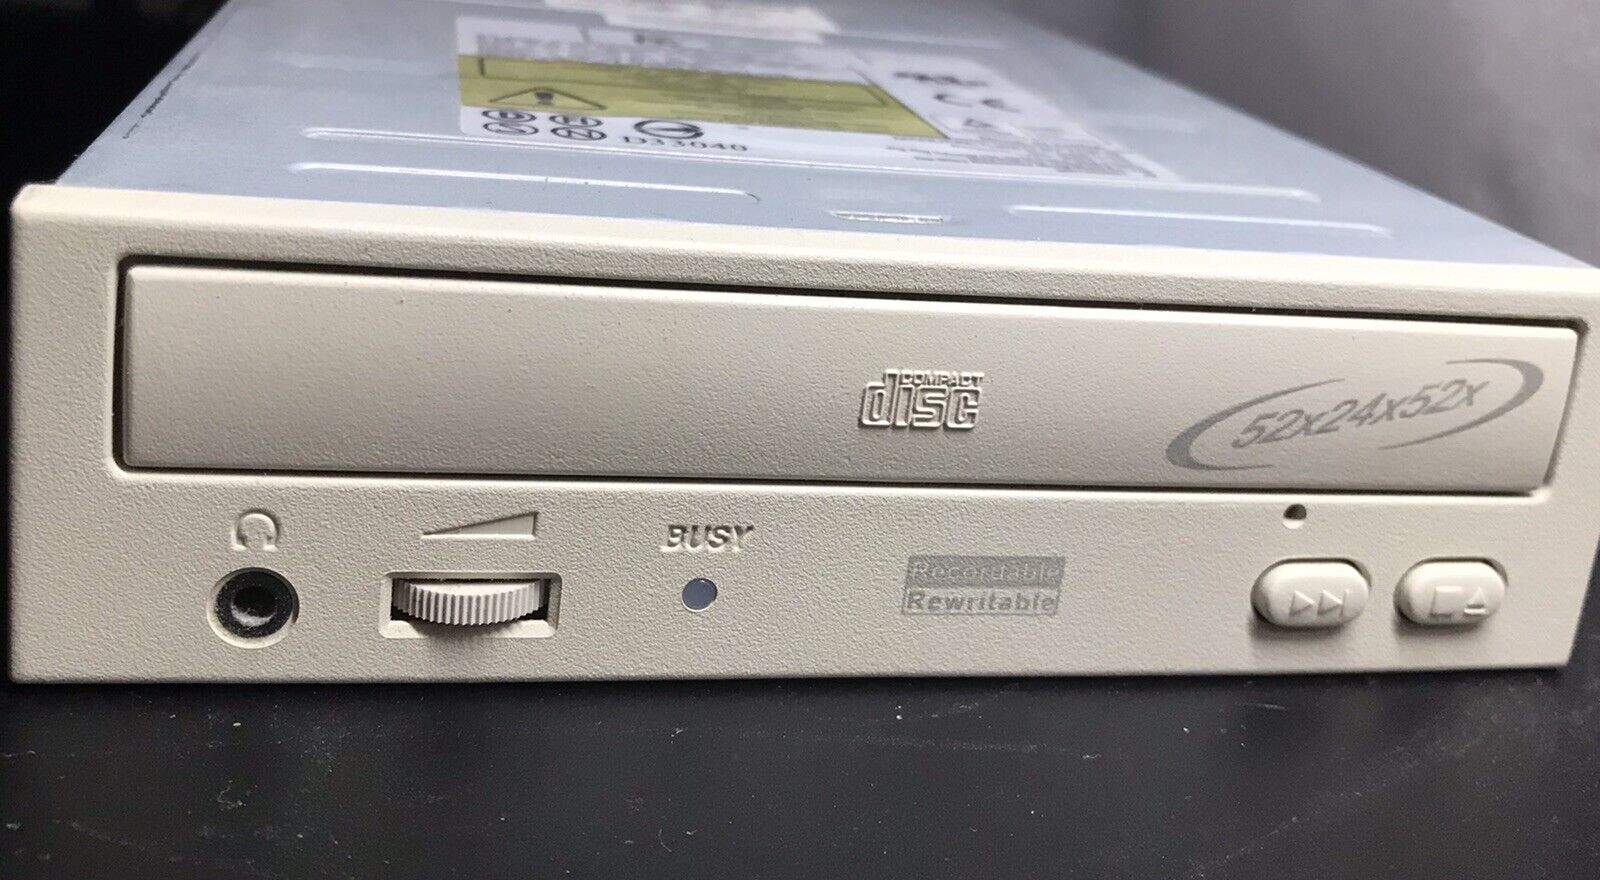 TOP-G 52x24x52x IDE Internal CD-ROM Drive - Beige Bezel